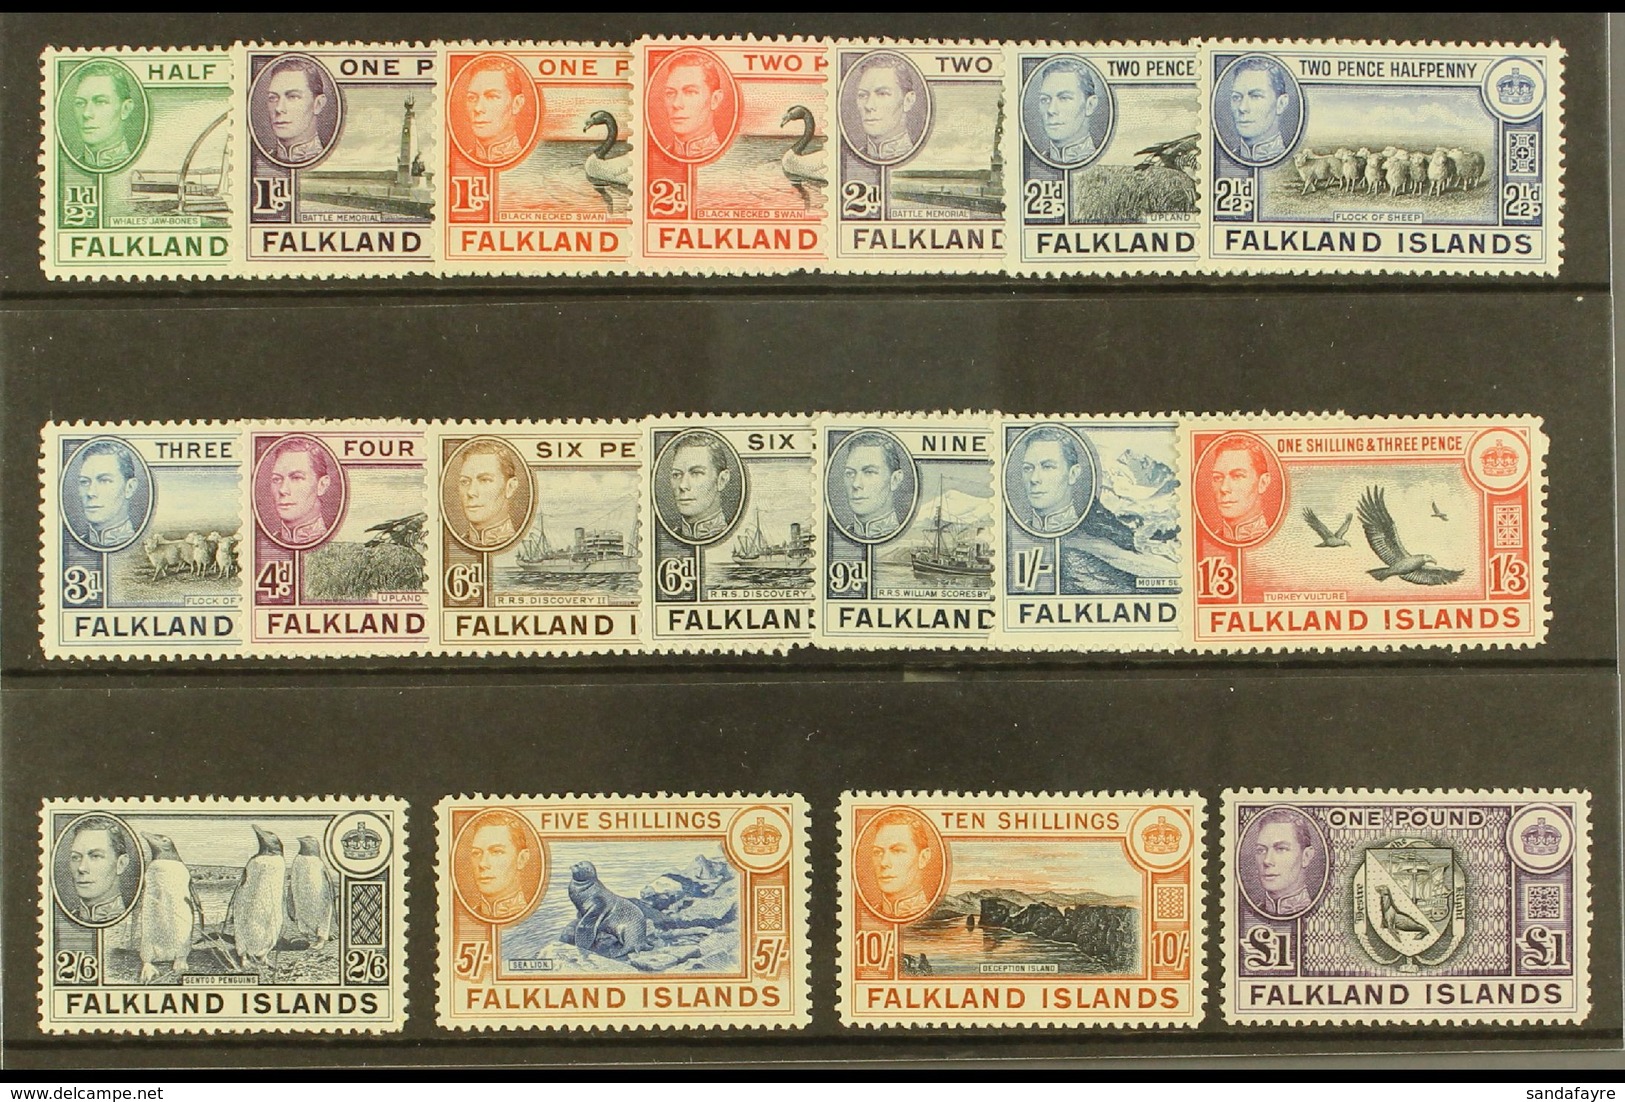 1938-50 Complete King George VI Definitive Set, SG 146/163, Very Fine Mint. (18 Stamps) For More Images, Please Visit Ht - Falkland Islands